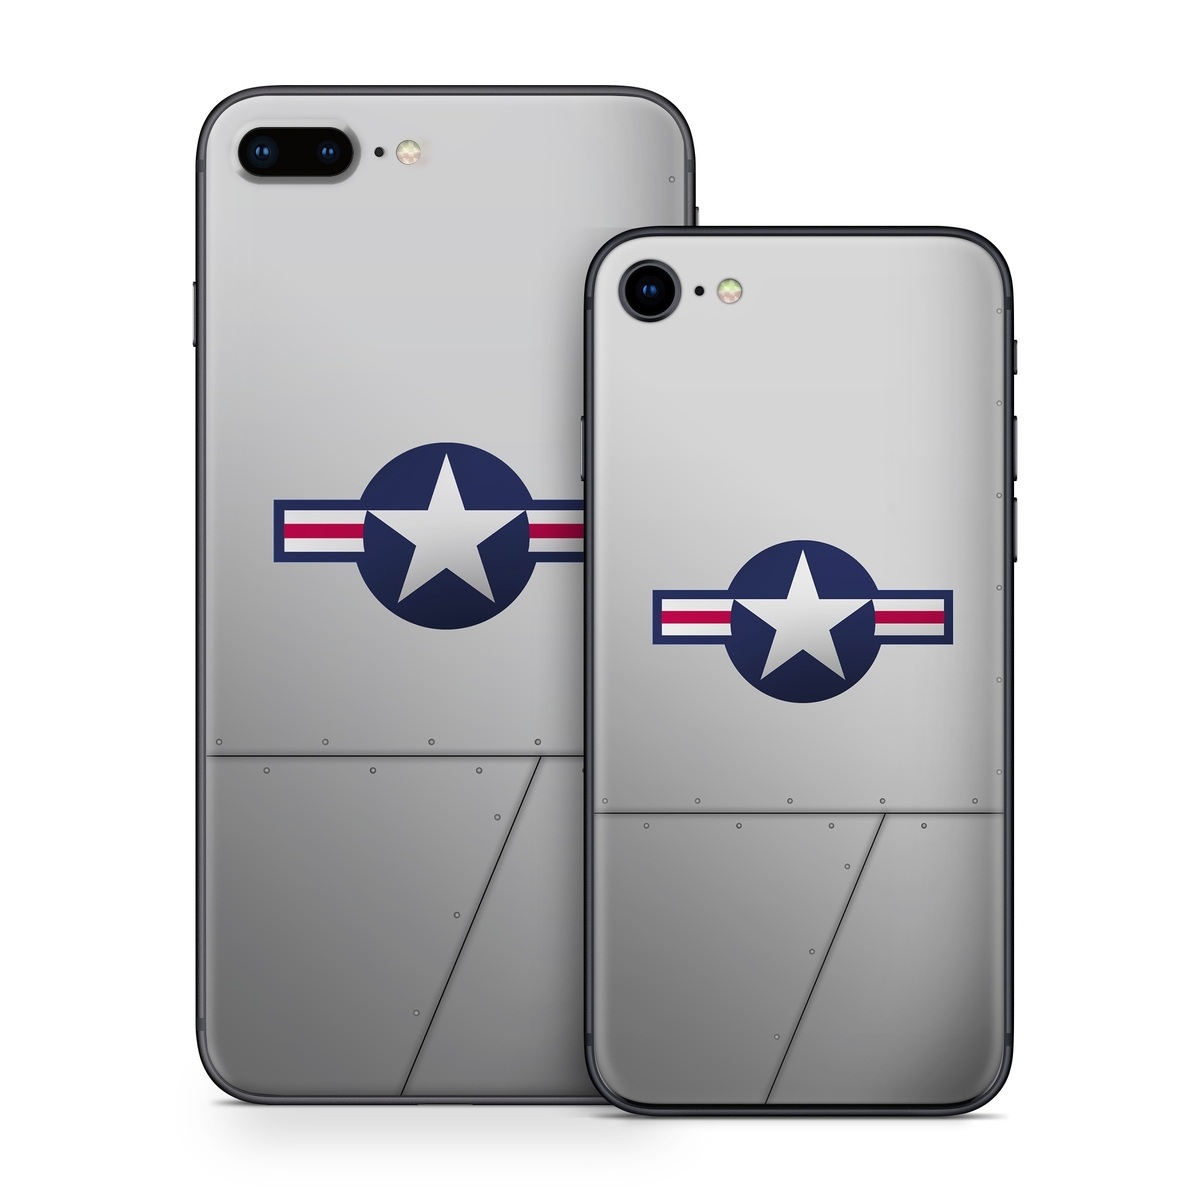 iPhone 8 Series Skin design of Logo, Flag, Emblem, Graphics, Symbol, Symmetry, with gray, black colors